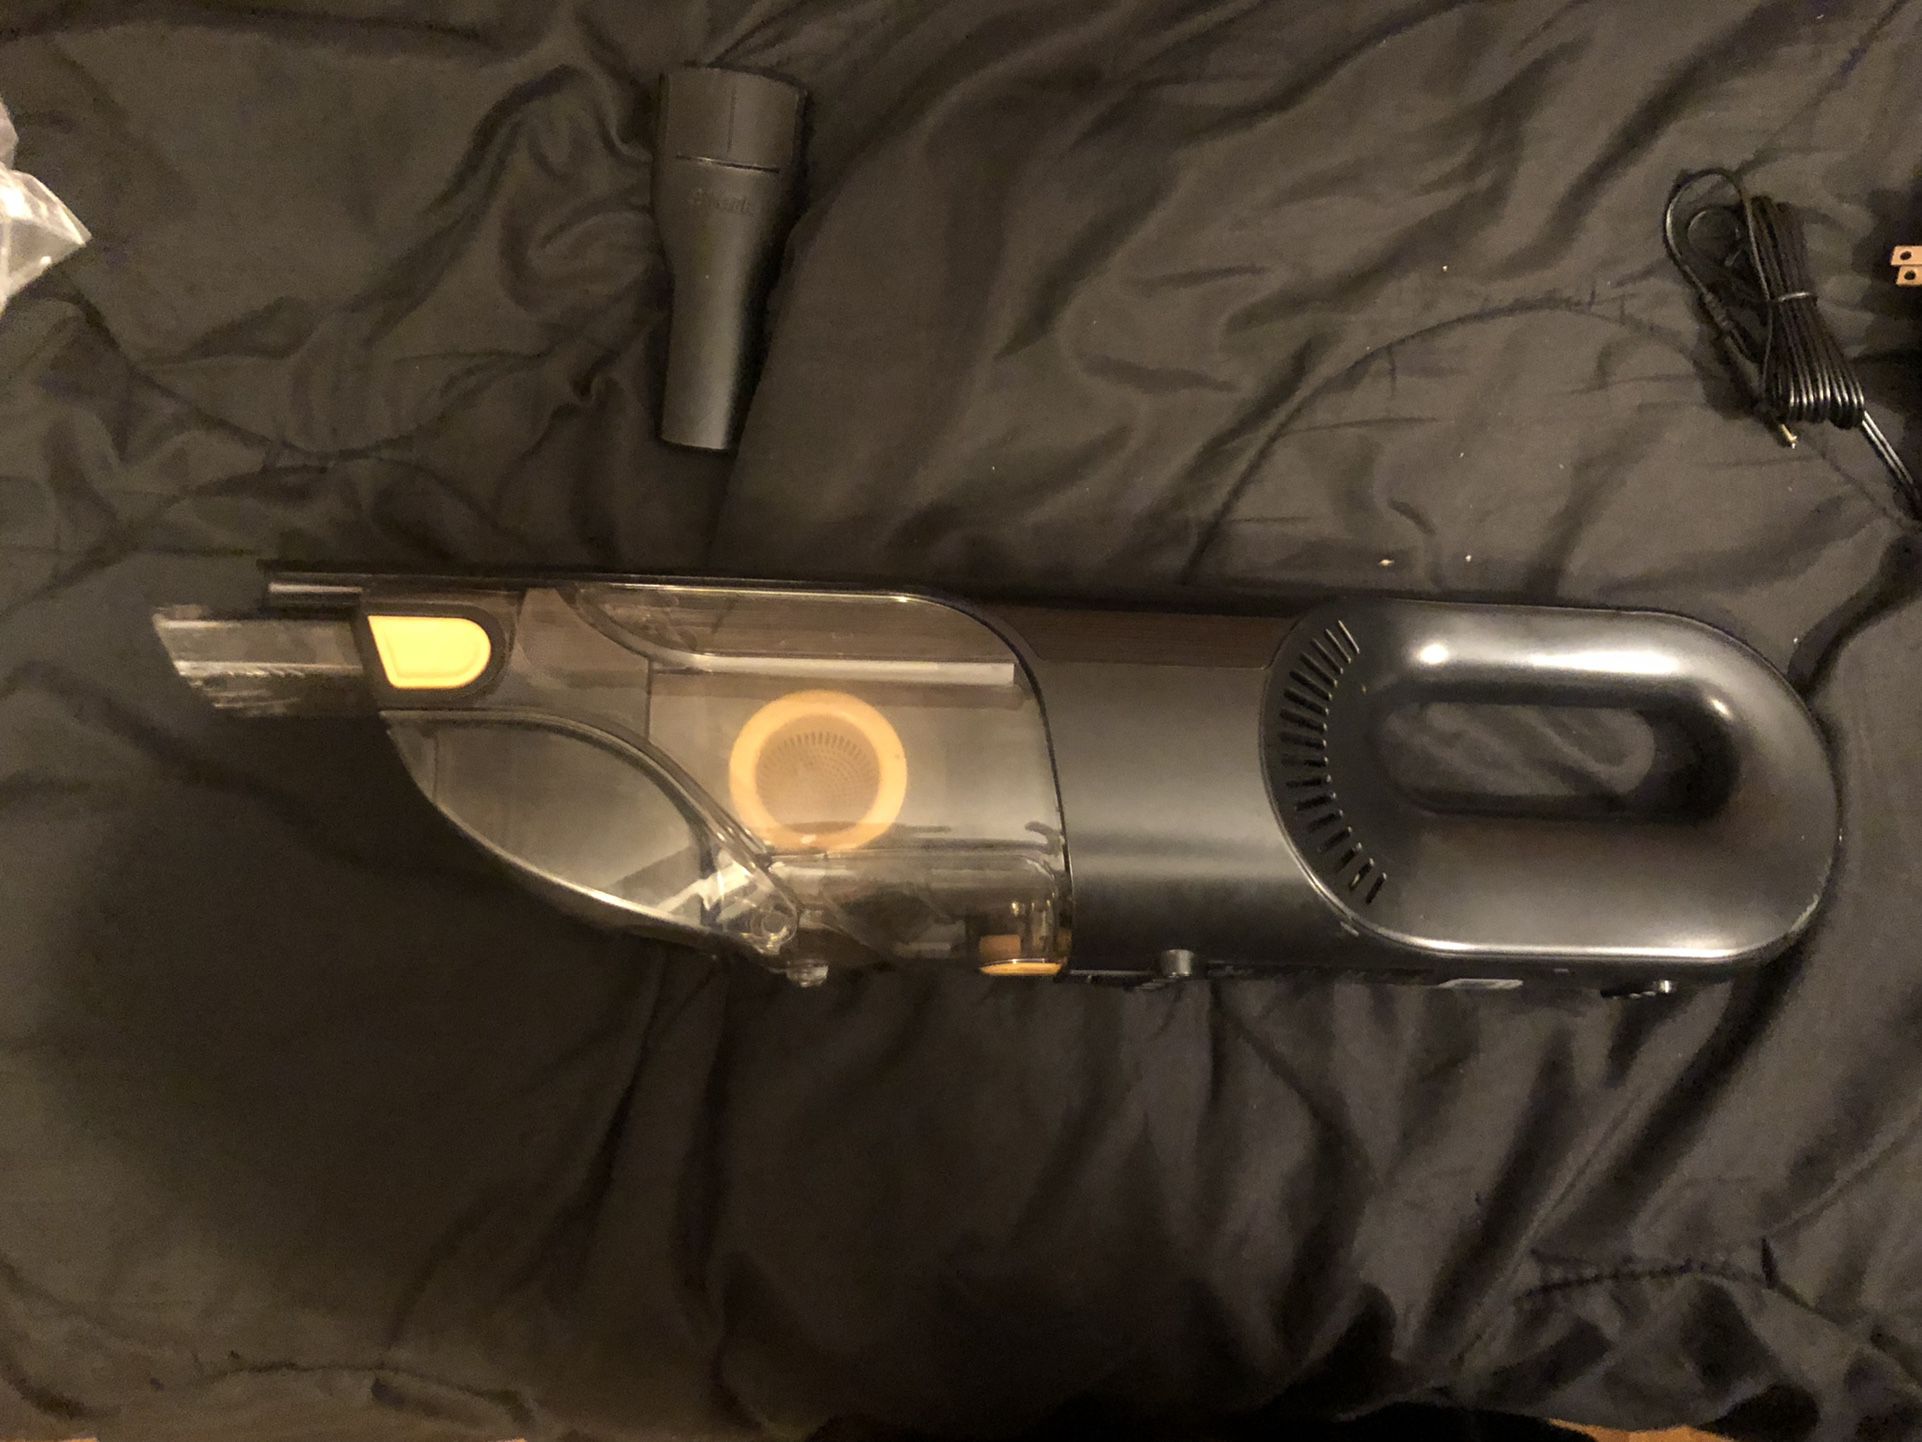 Shark UltraCyclone  Pet Pro+ Cordless Handheld Vacuum